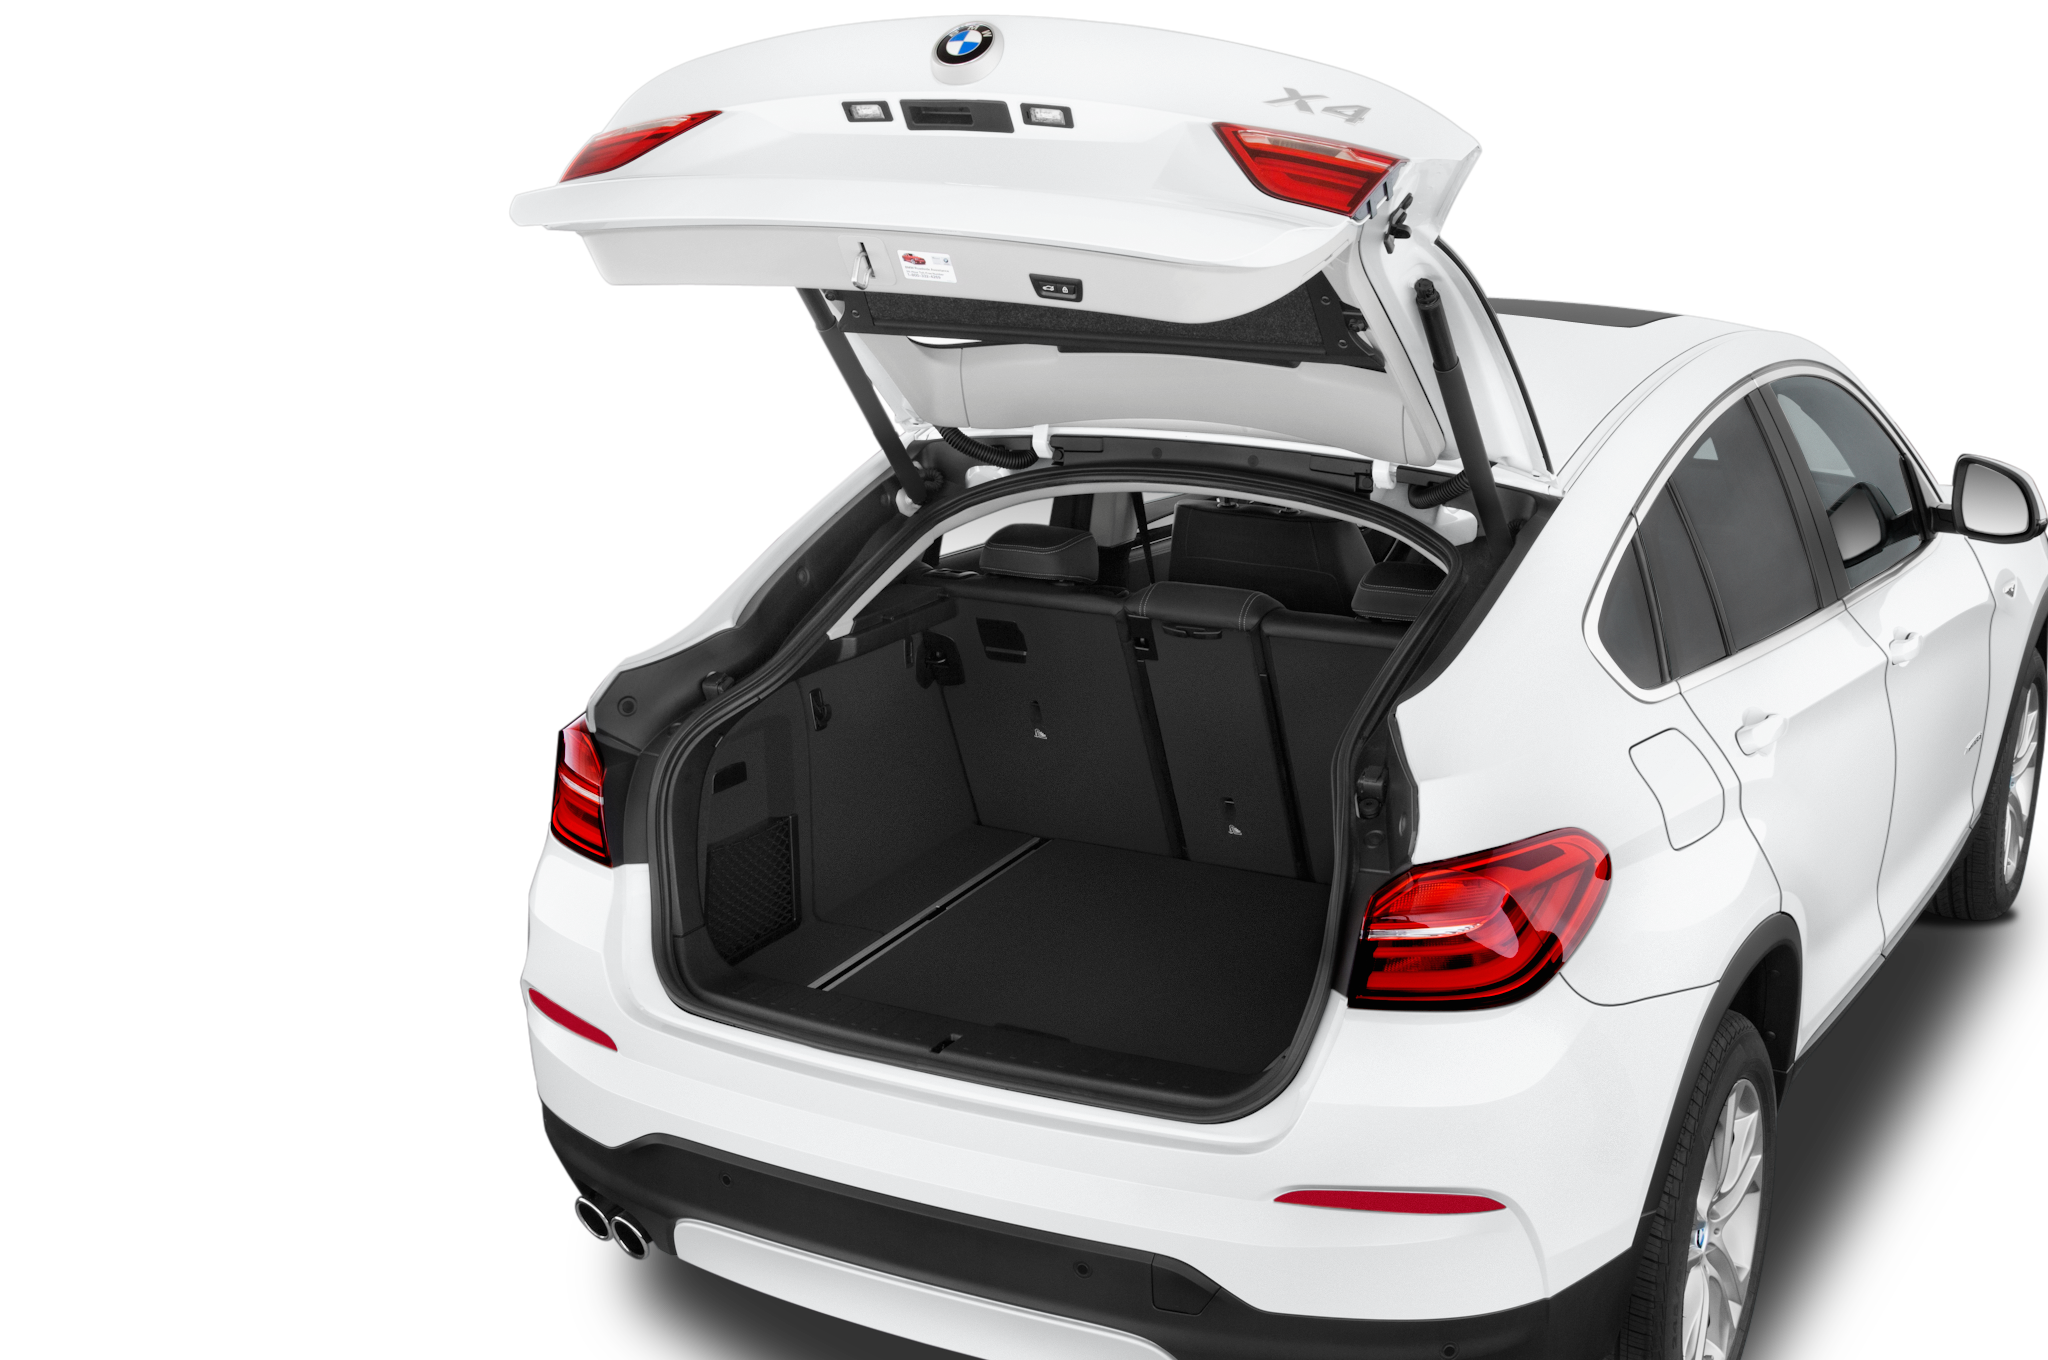 BMW X4 Backgrounds, Compatible - PC, Mobile, Gadgets| 2048x1360 px